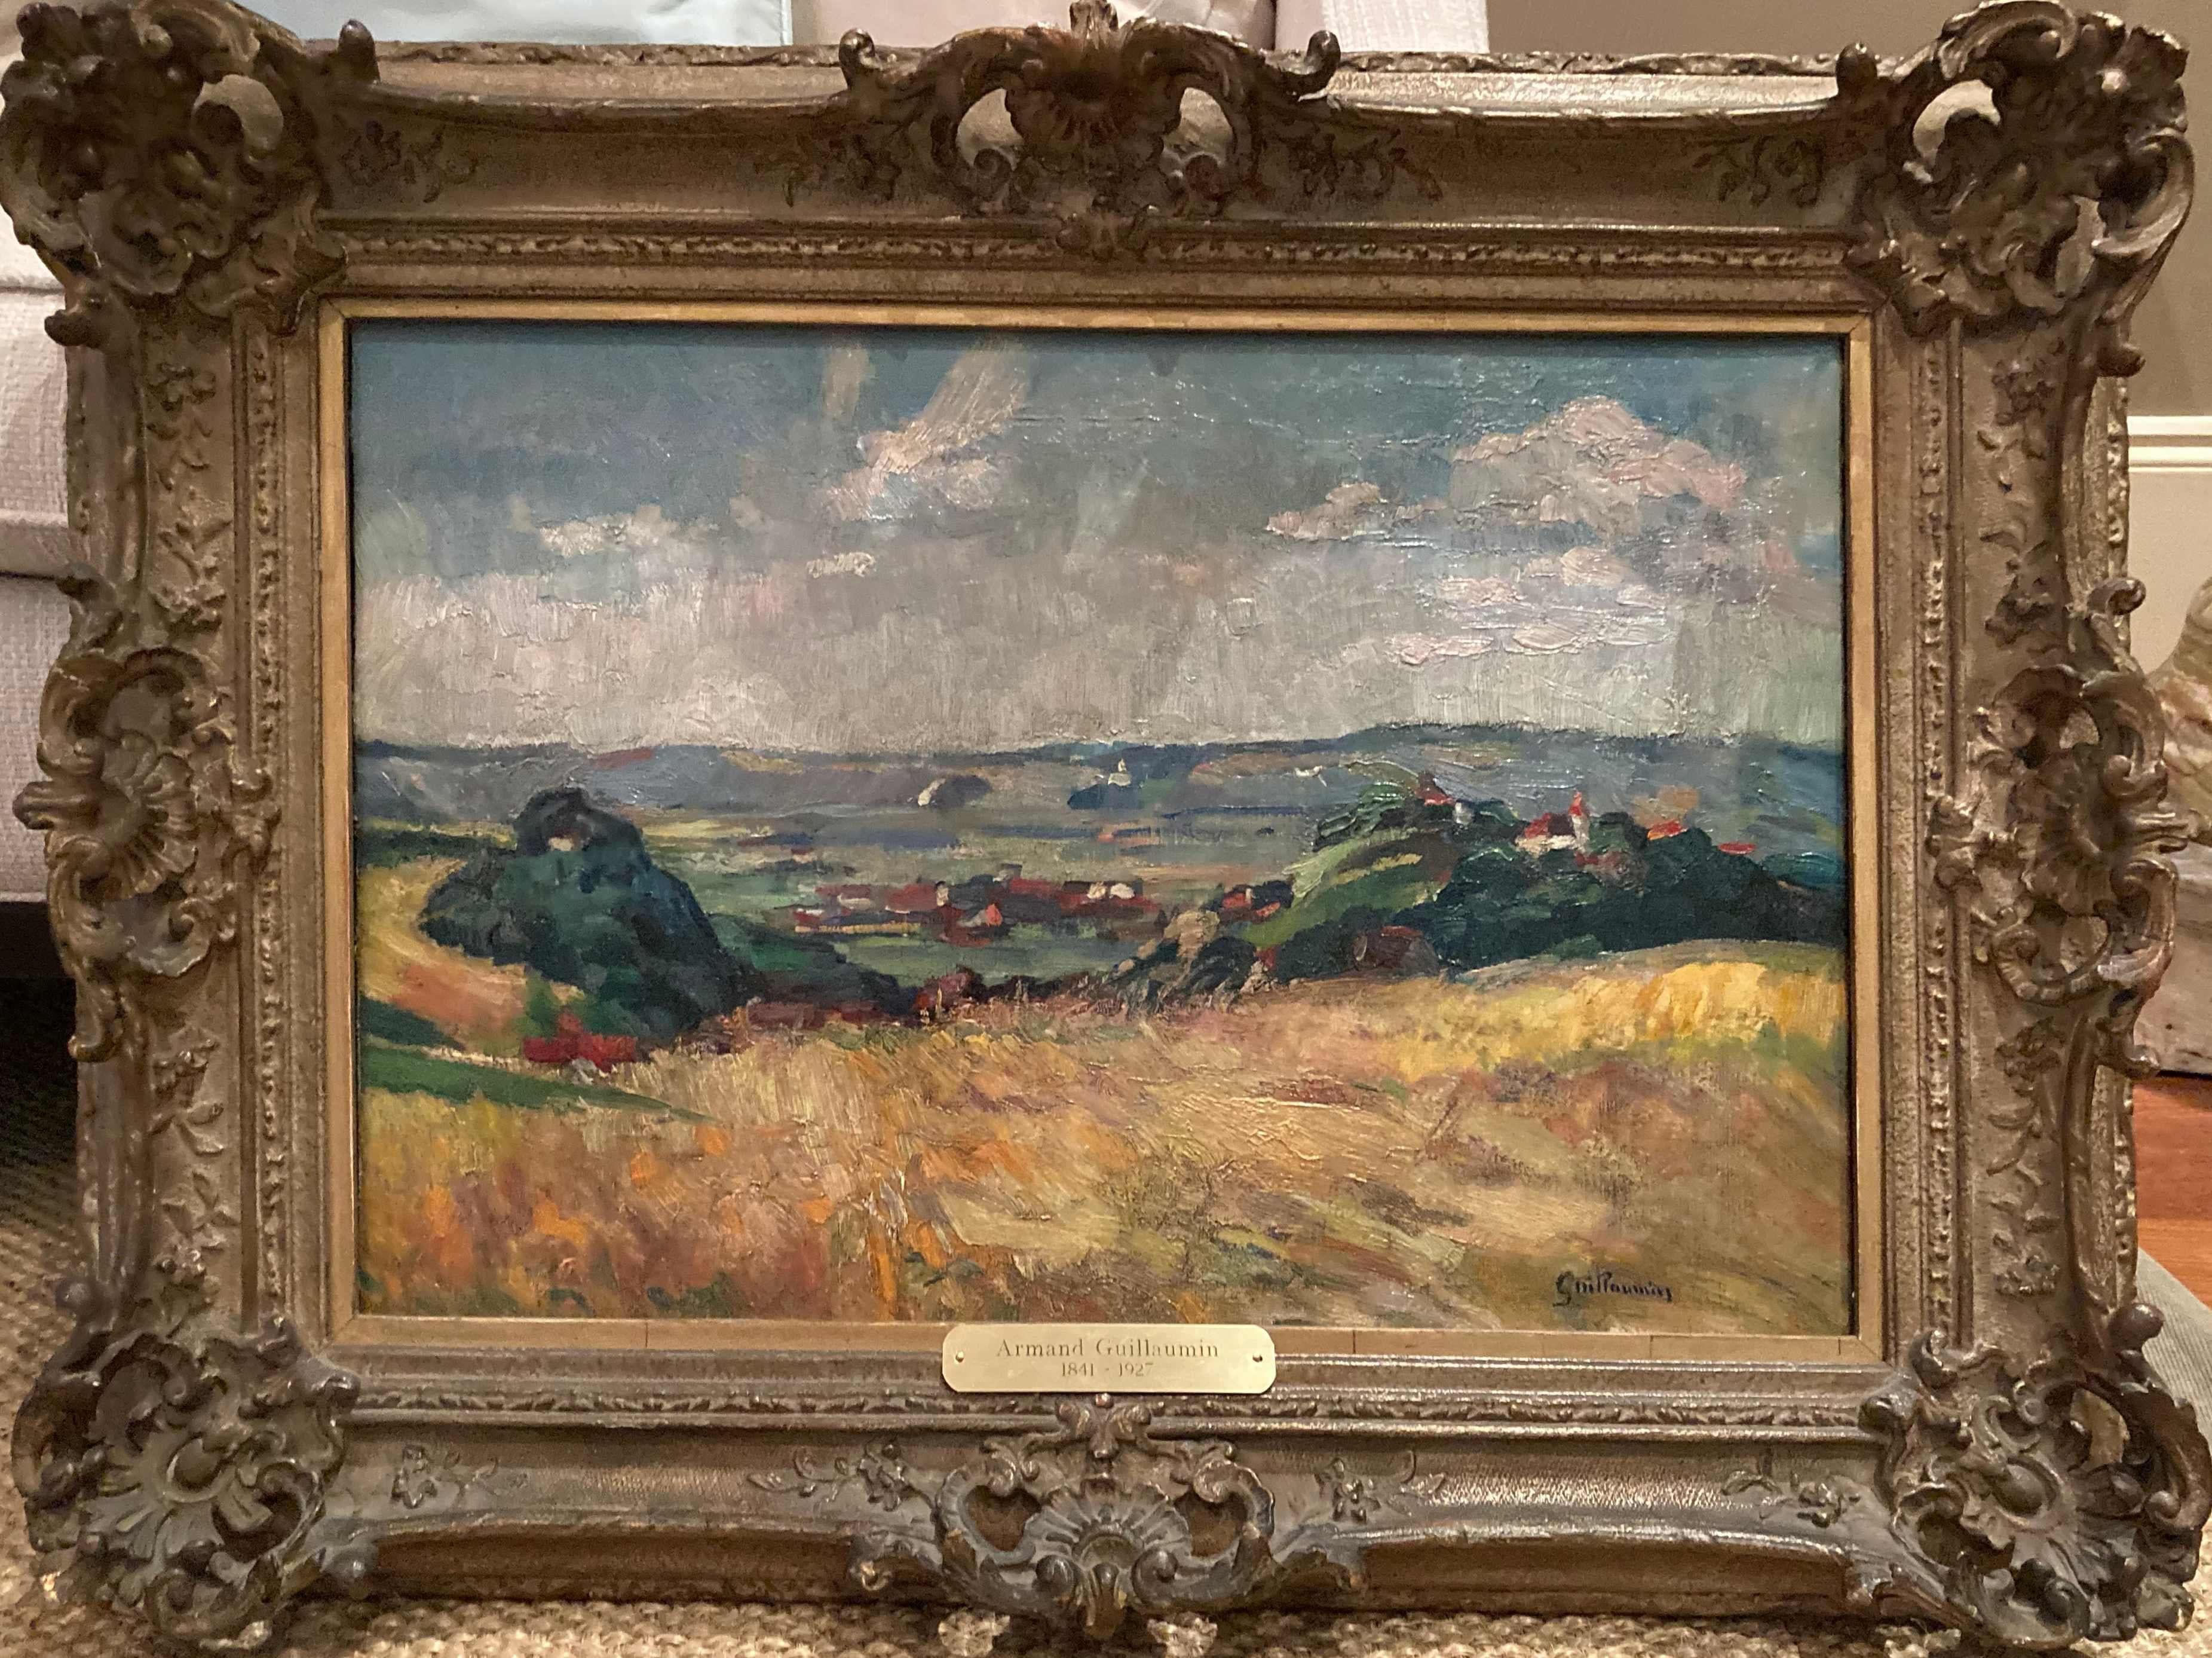 Armand Guillaumin Landscape Painting - "Printemps" (Spring) - major Impressionist, showed with Cezanne, Manet, etc.